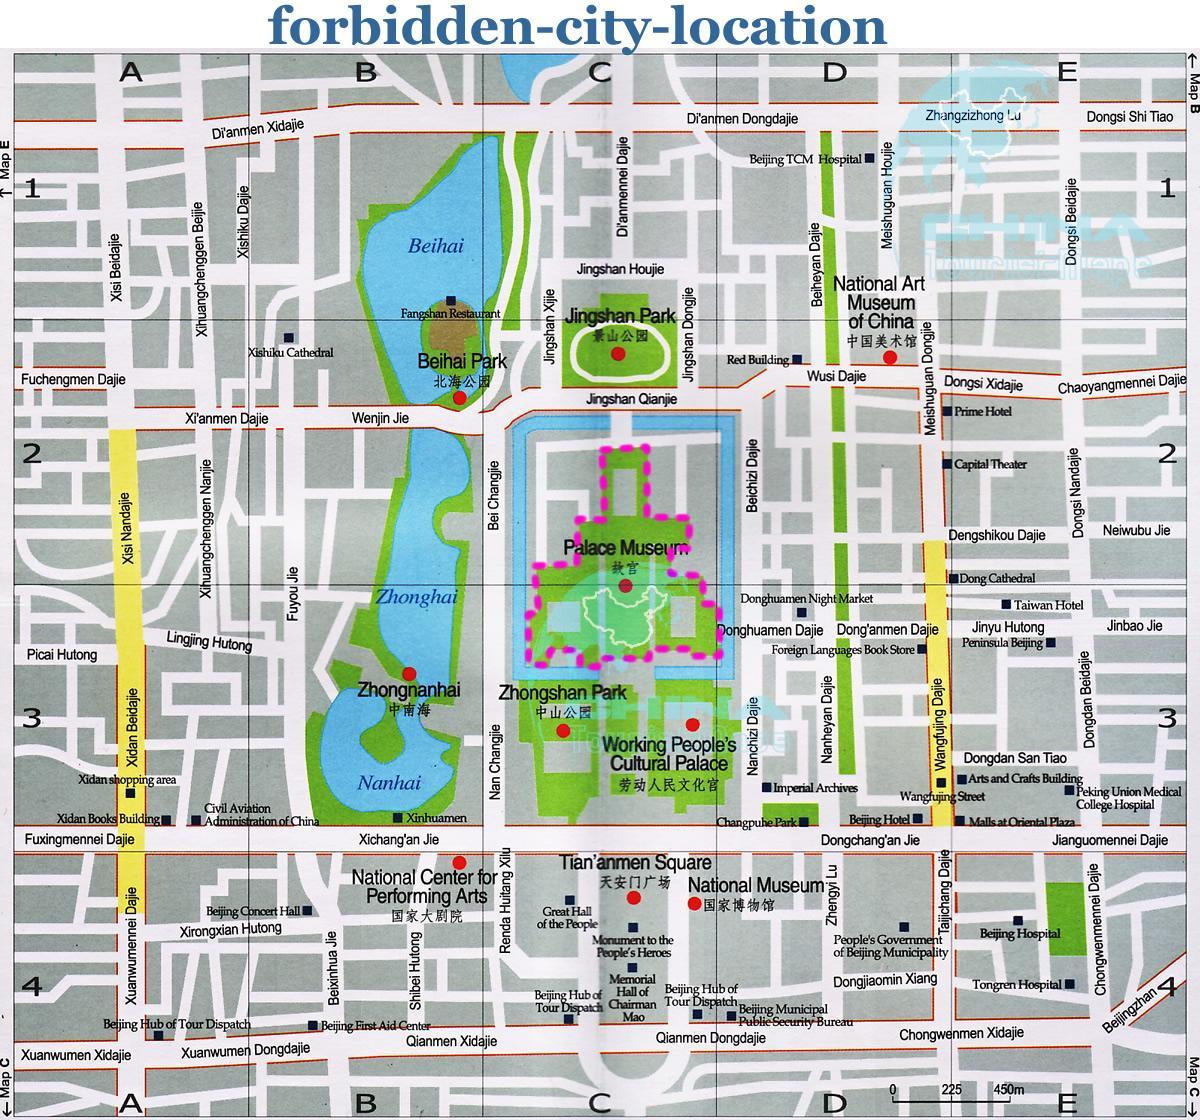 mapa de la ciudad prohibida mapa detallado